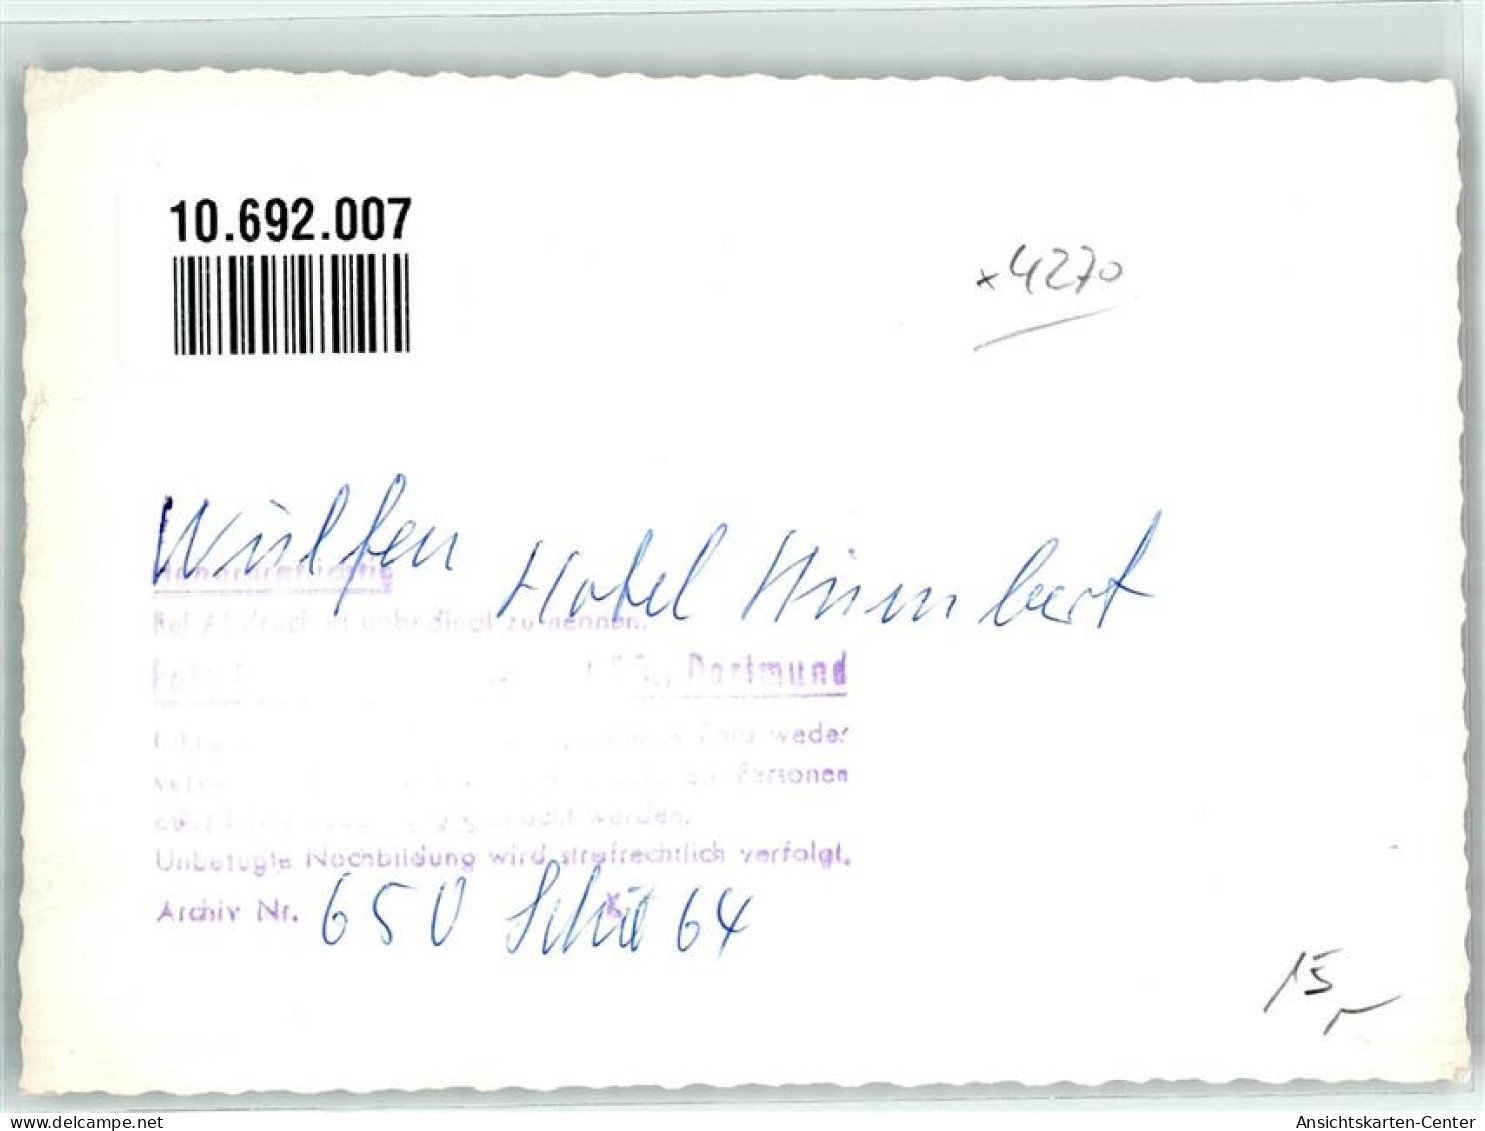 10692007 - Wulfen , Westf - Dorsten